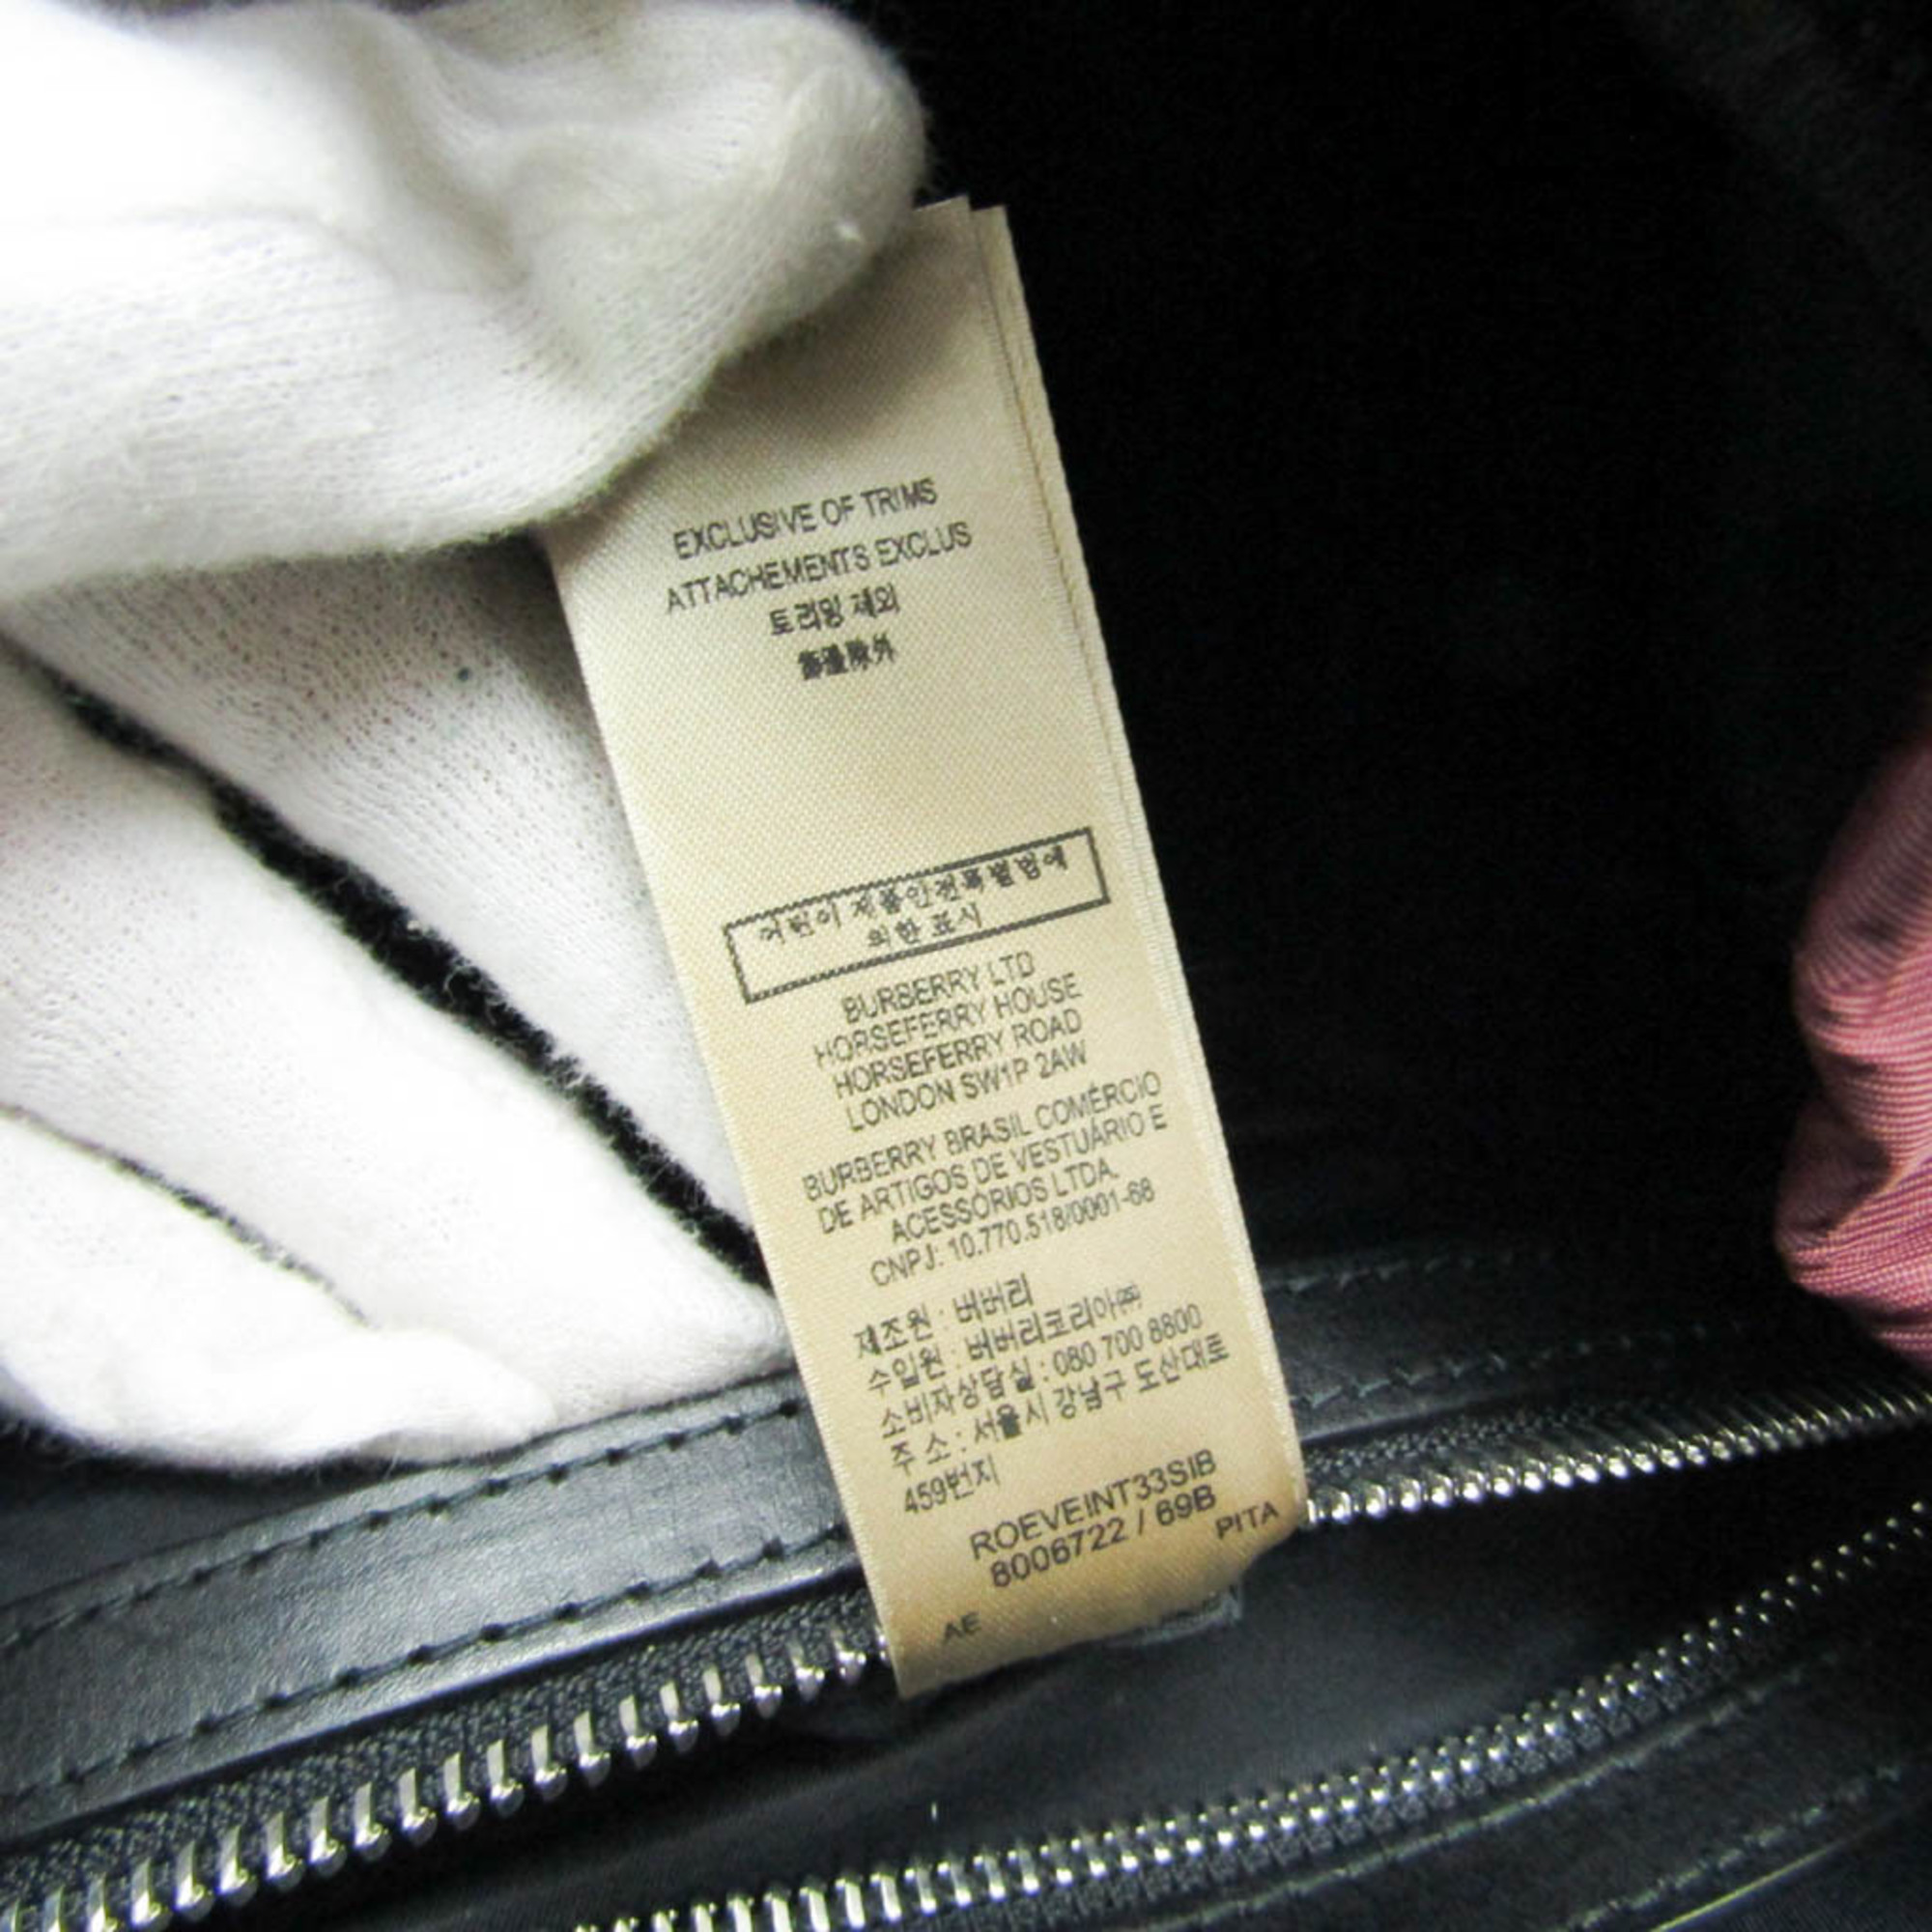 Burberry 8006722 Women's Nylon,Leather Backpack Bordeaux